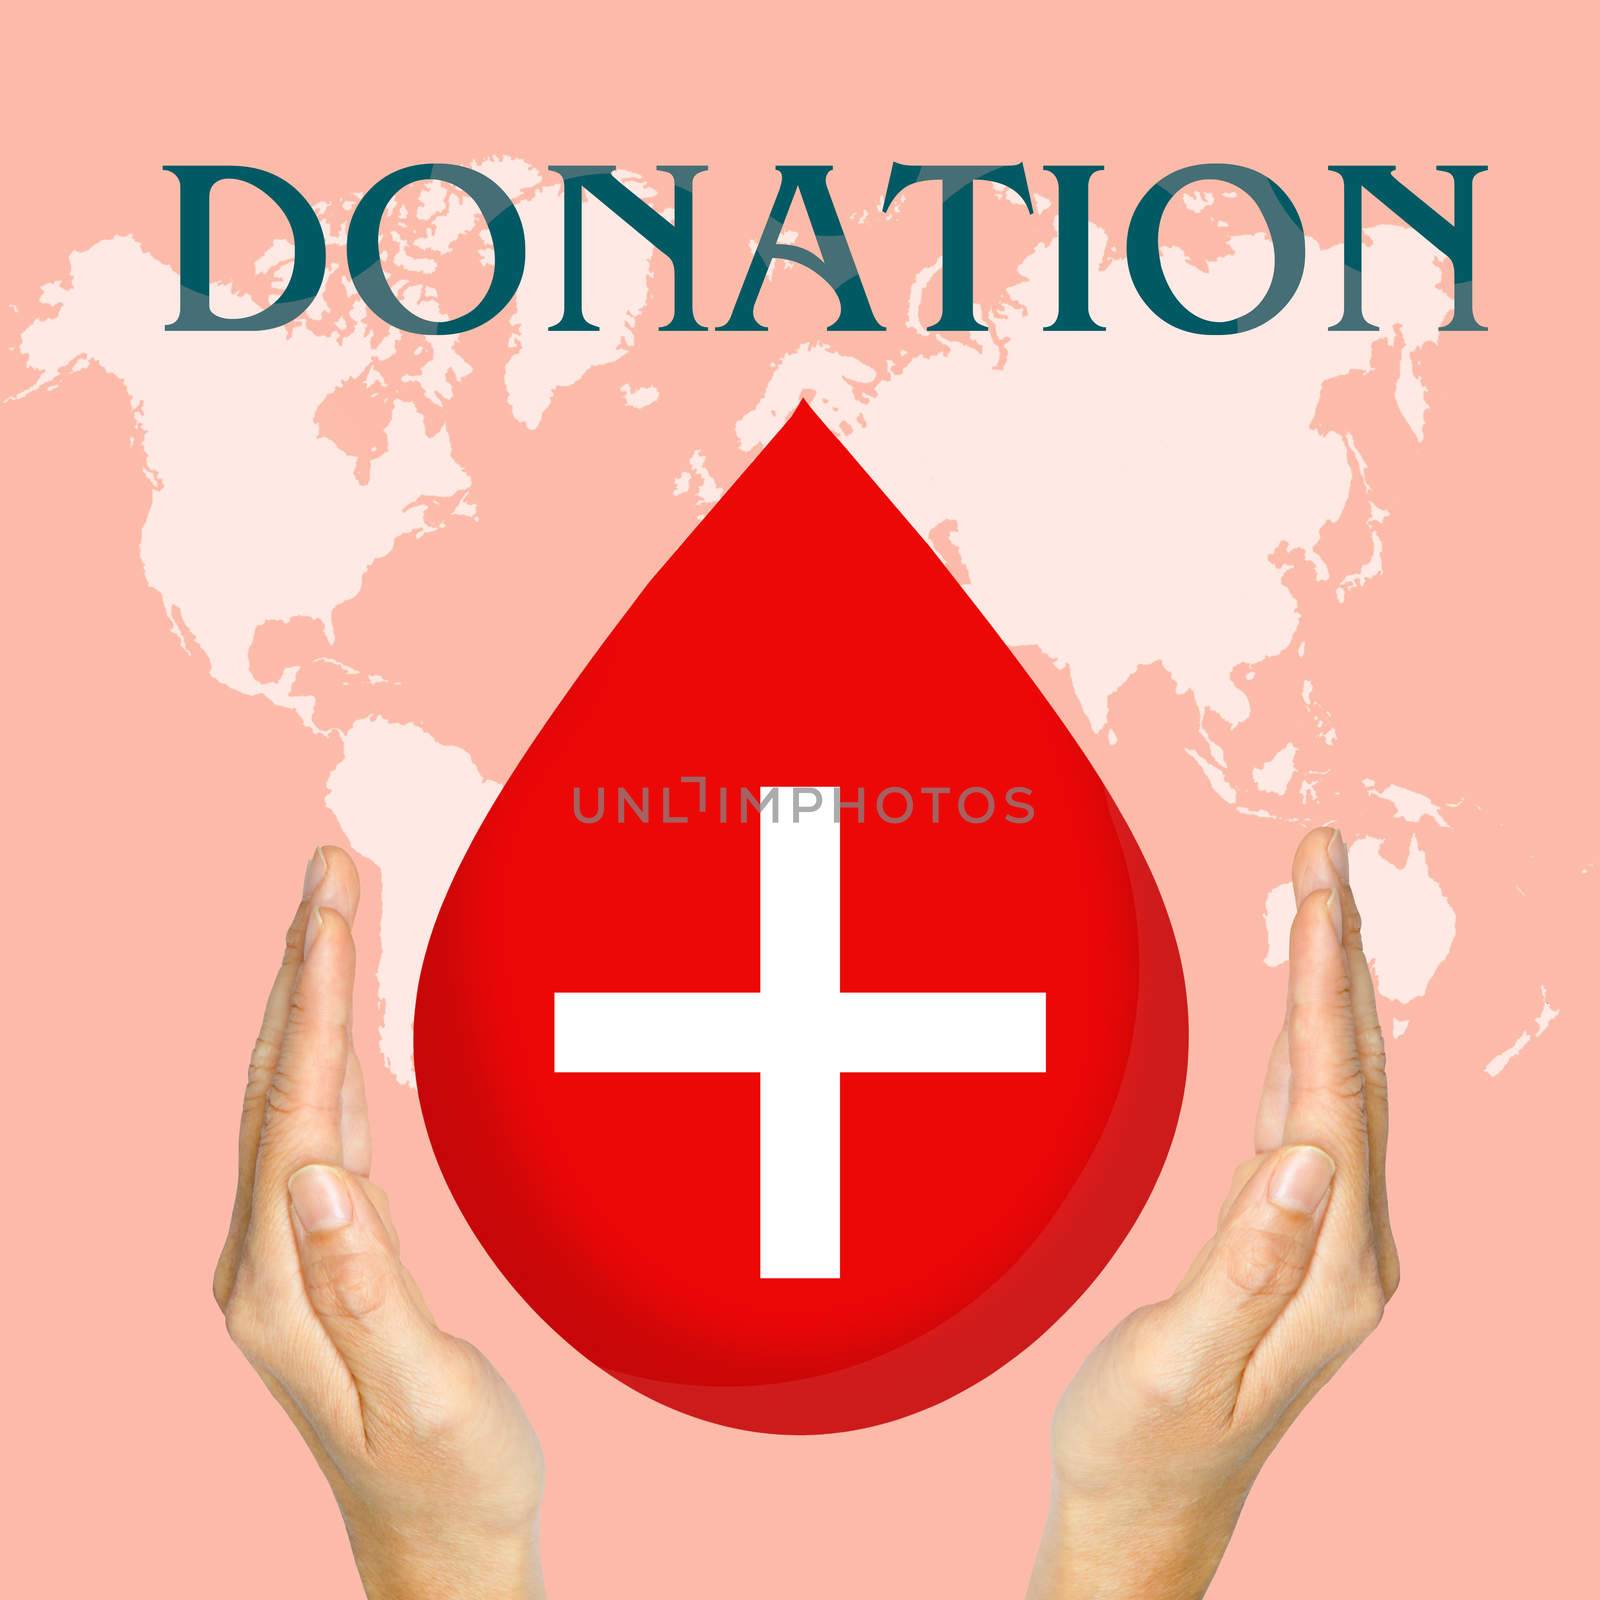 Blood donation by Gamjai